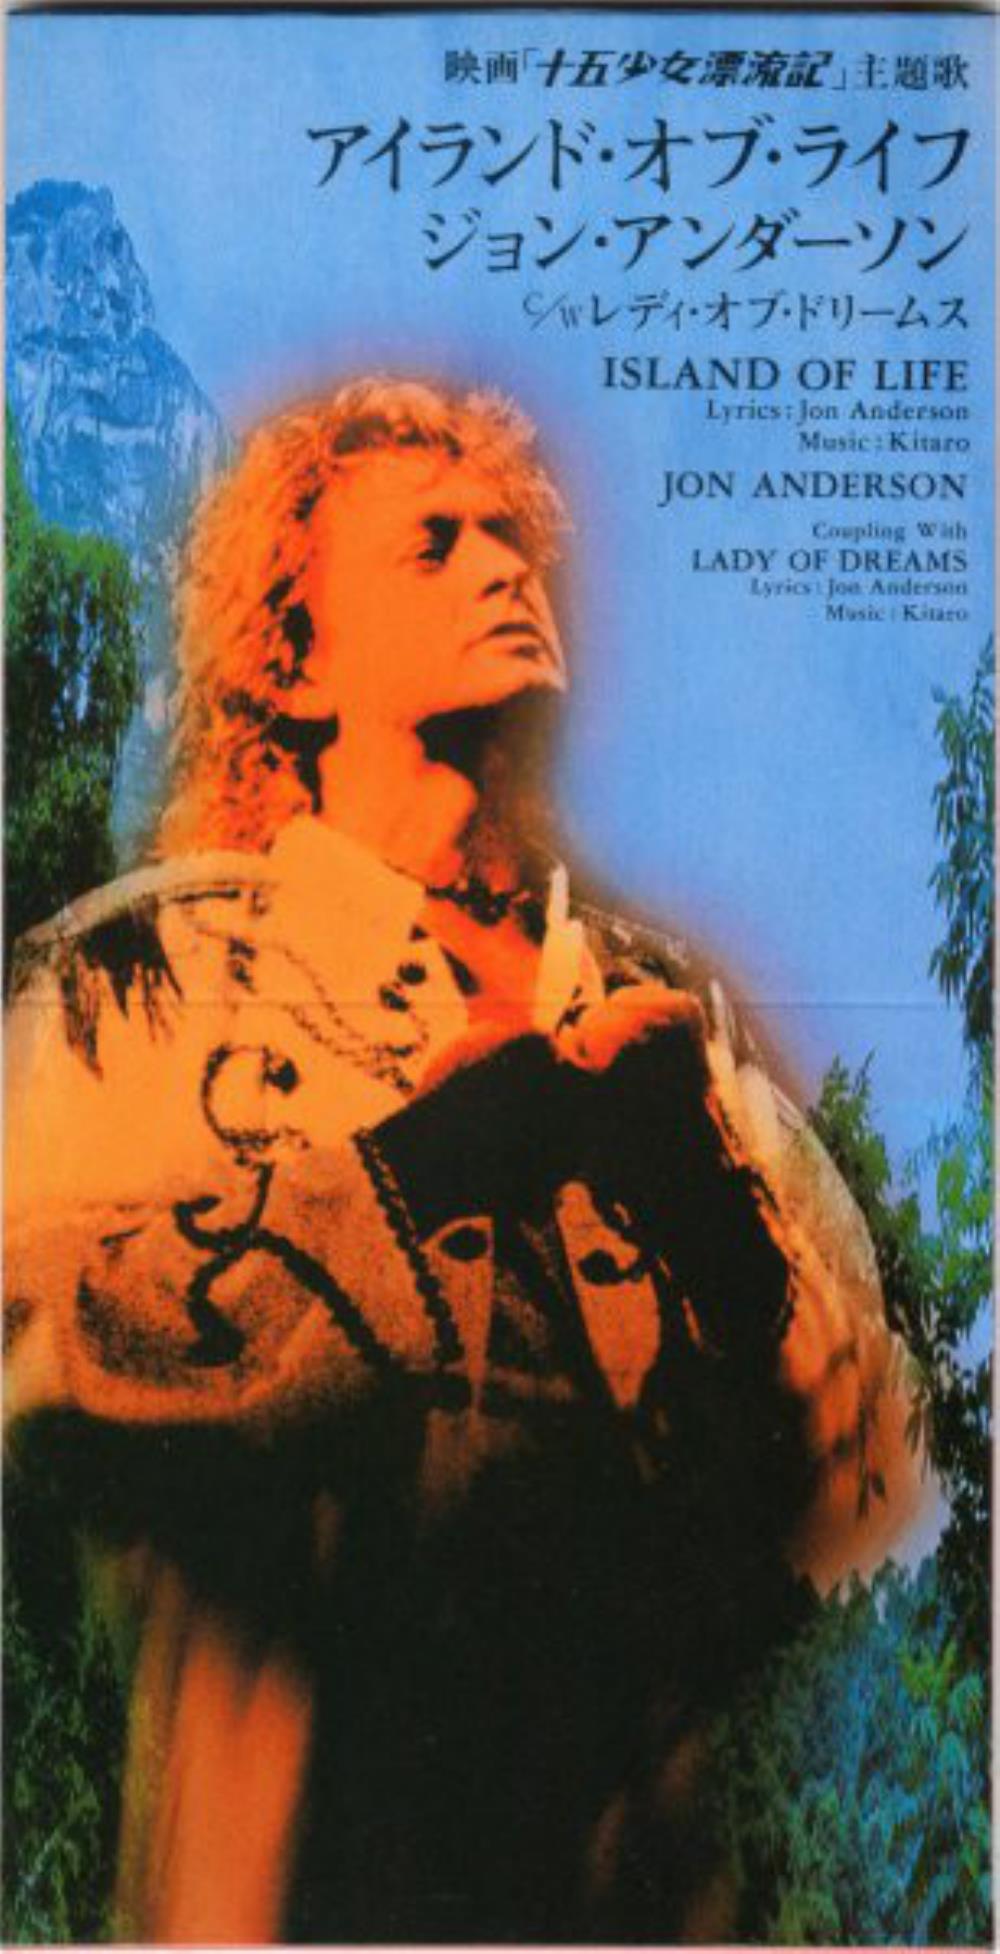 Jon Anderson Jon Anderson / Kitaro - Island of Life album cover